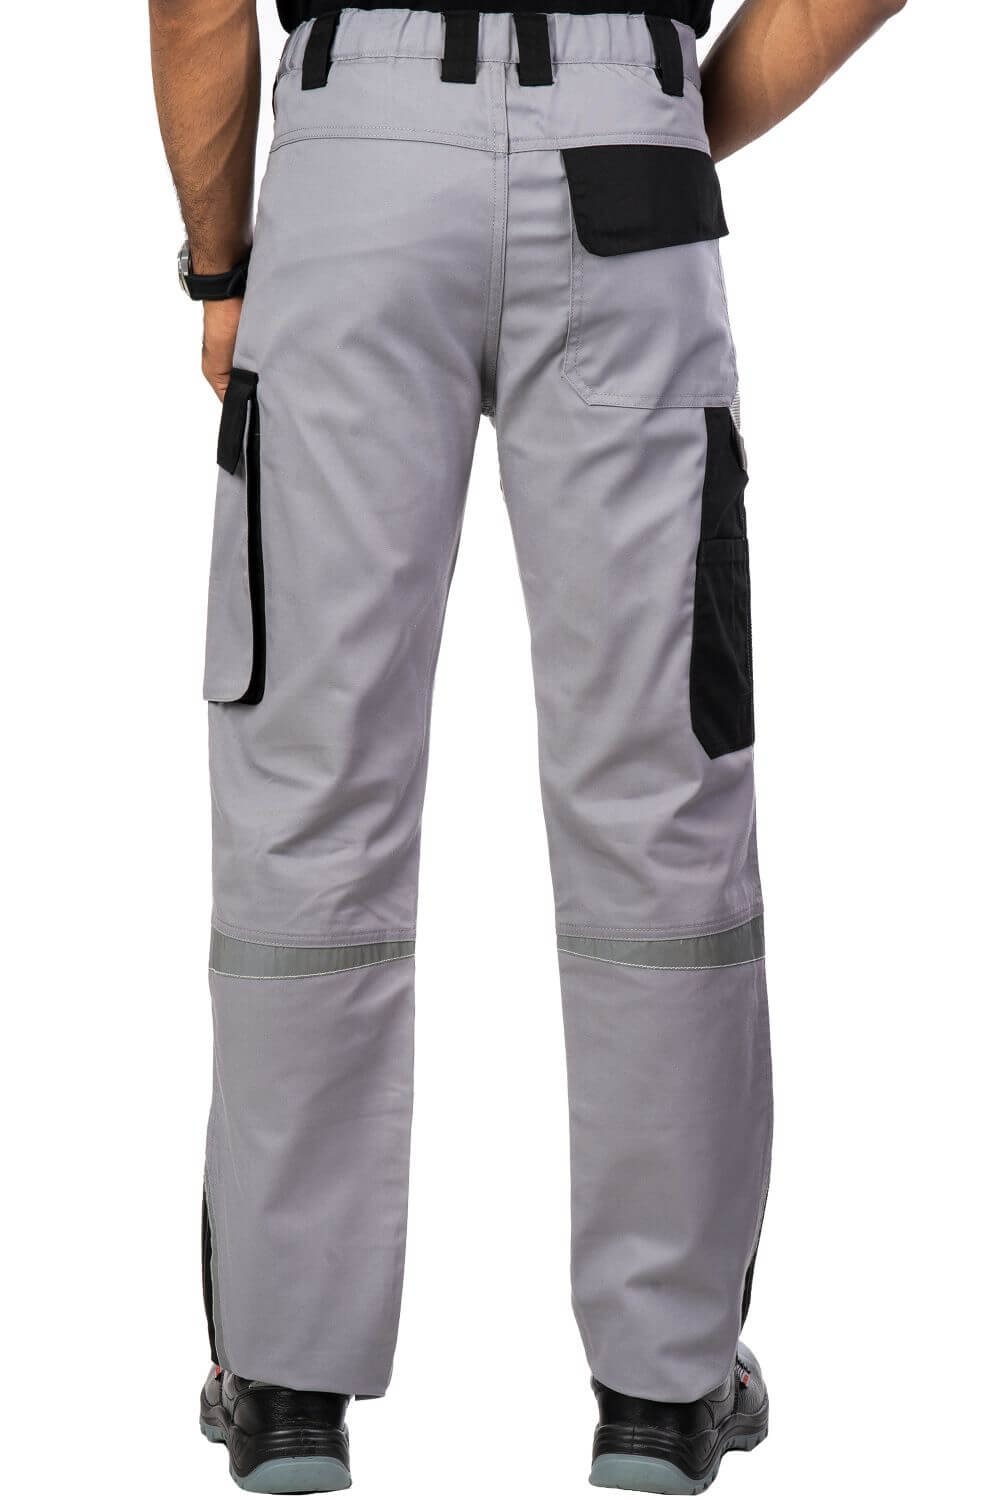 Colorado Carbon/Black Industrial Design Trousers